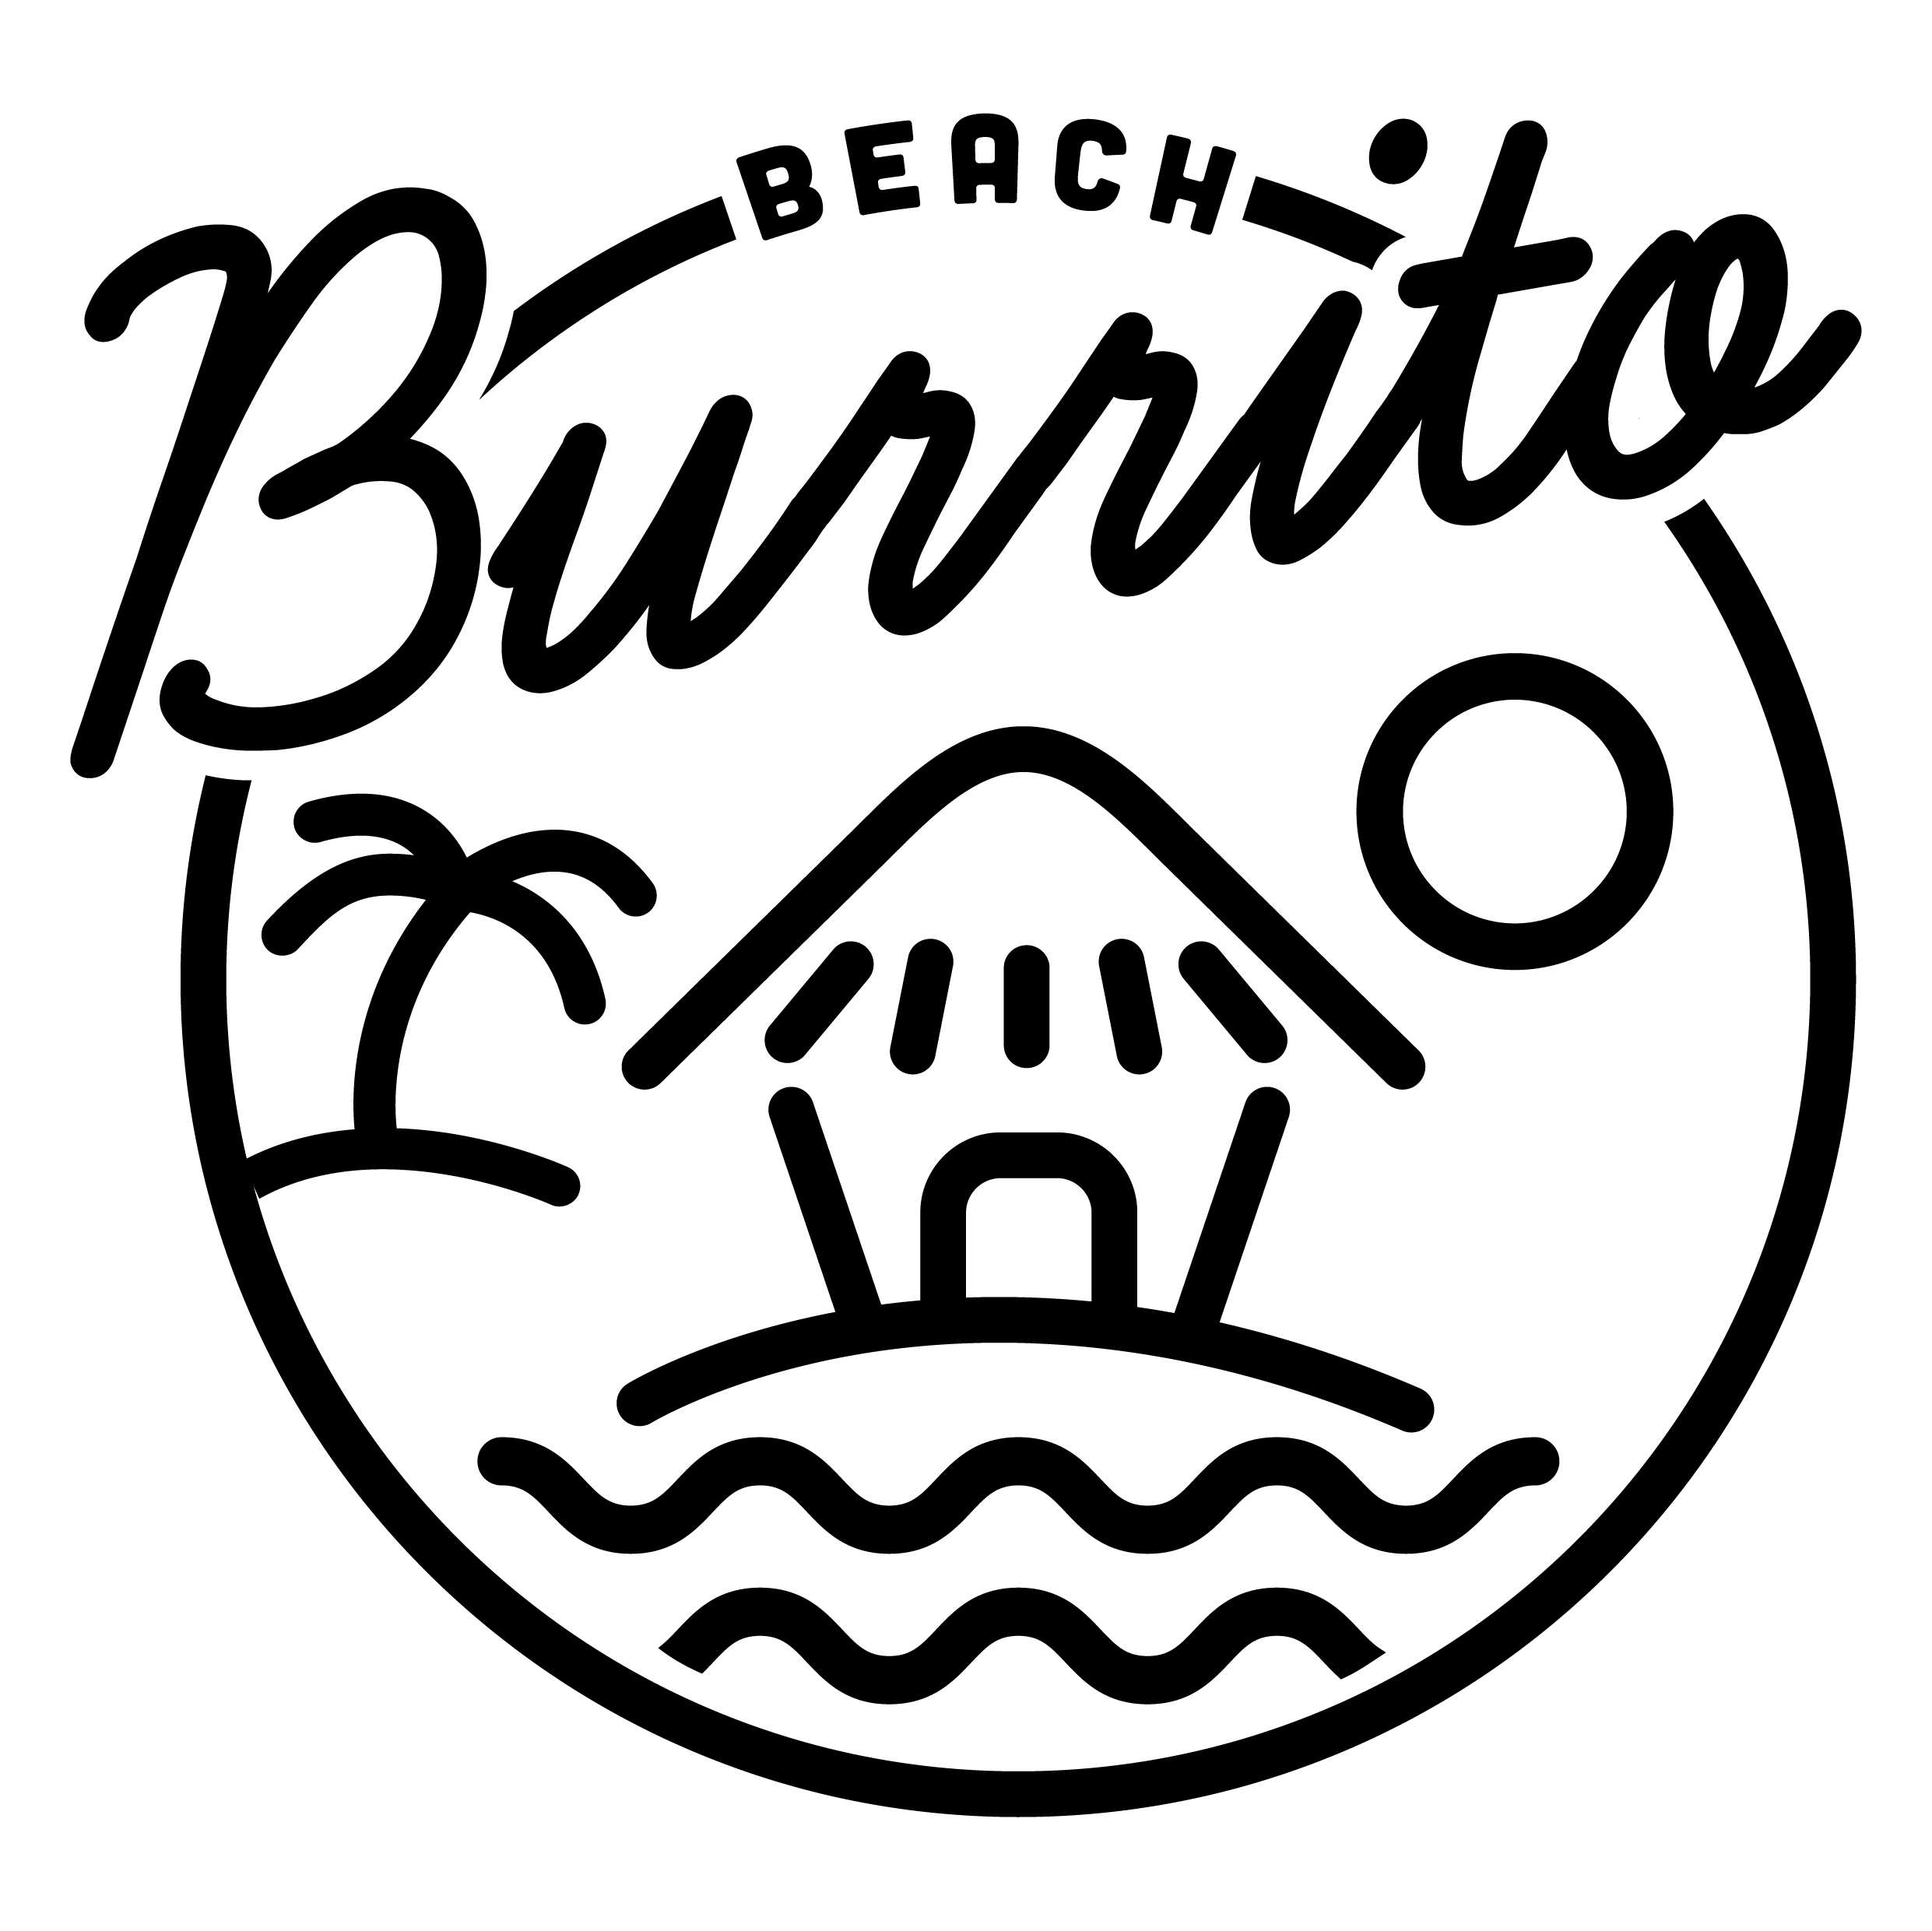 Beach Burrito logo